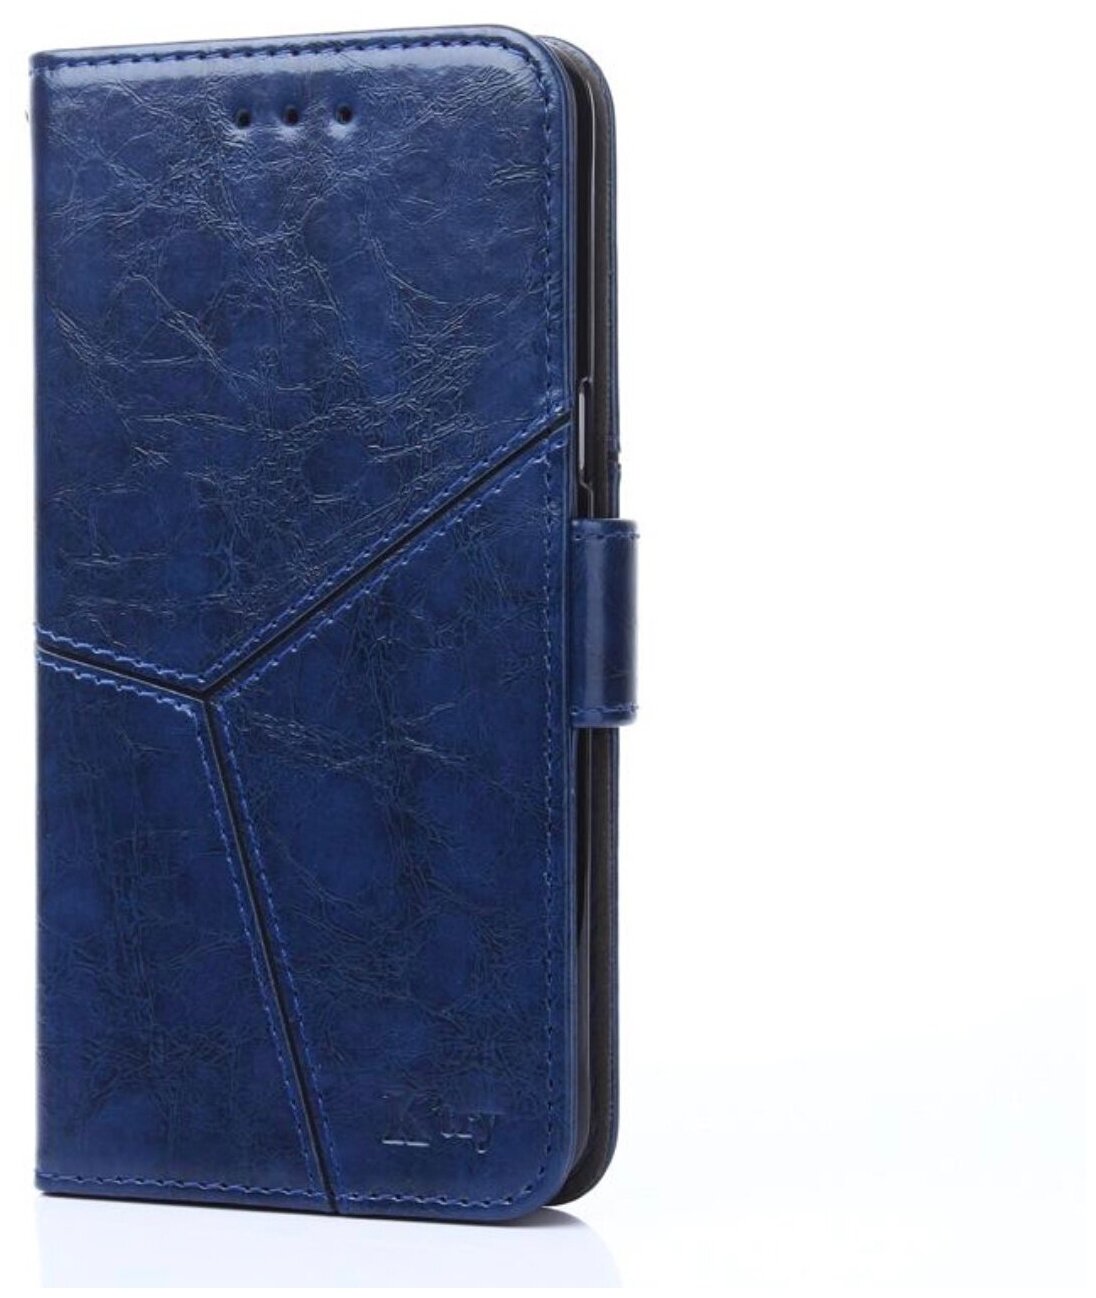 Чехол-книжка Чехол. ру для Huawei Honor 10 Lite / Huawei P Smart (2019)прошитый по контуру с необычным геометрическим швом синий